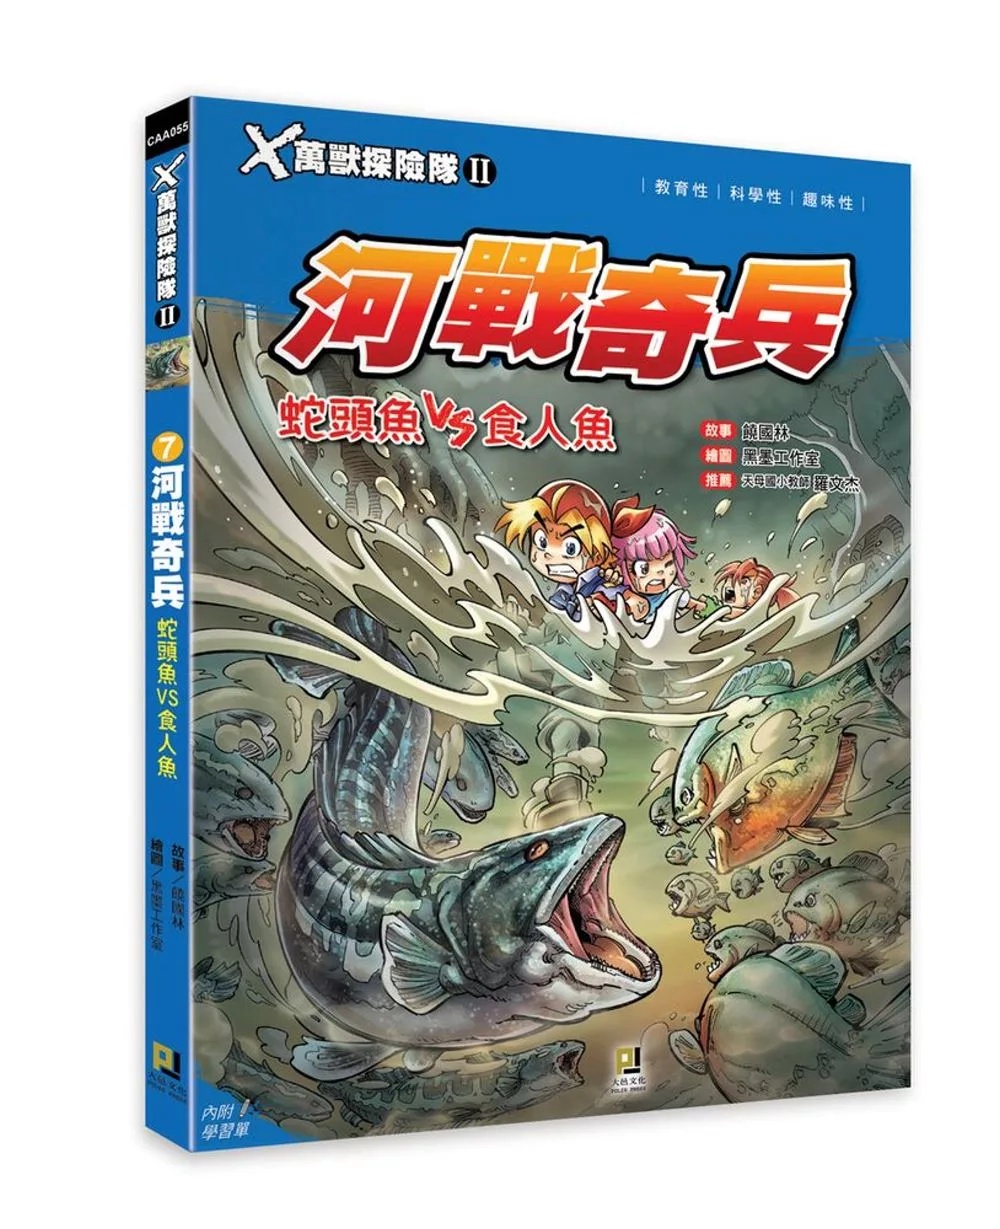 X萬獸探險隊Ⅱ：(7) 河戰奇兵 蛇頭魚VS食人魚(附學習單)